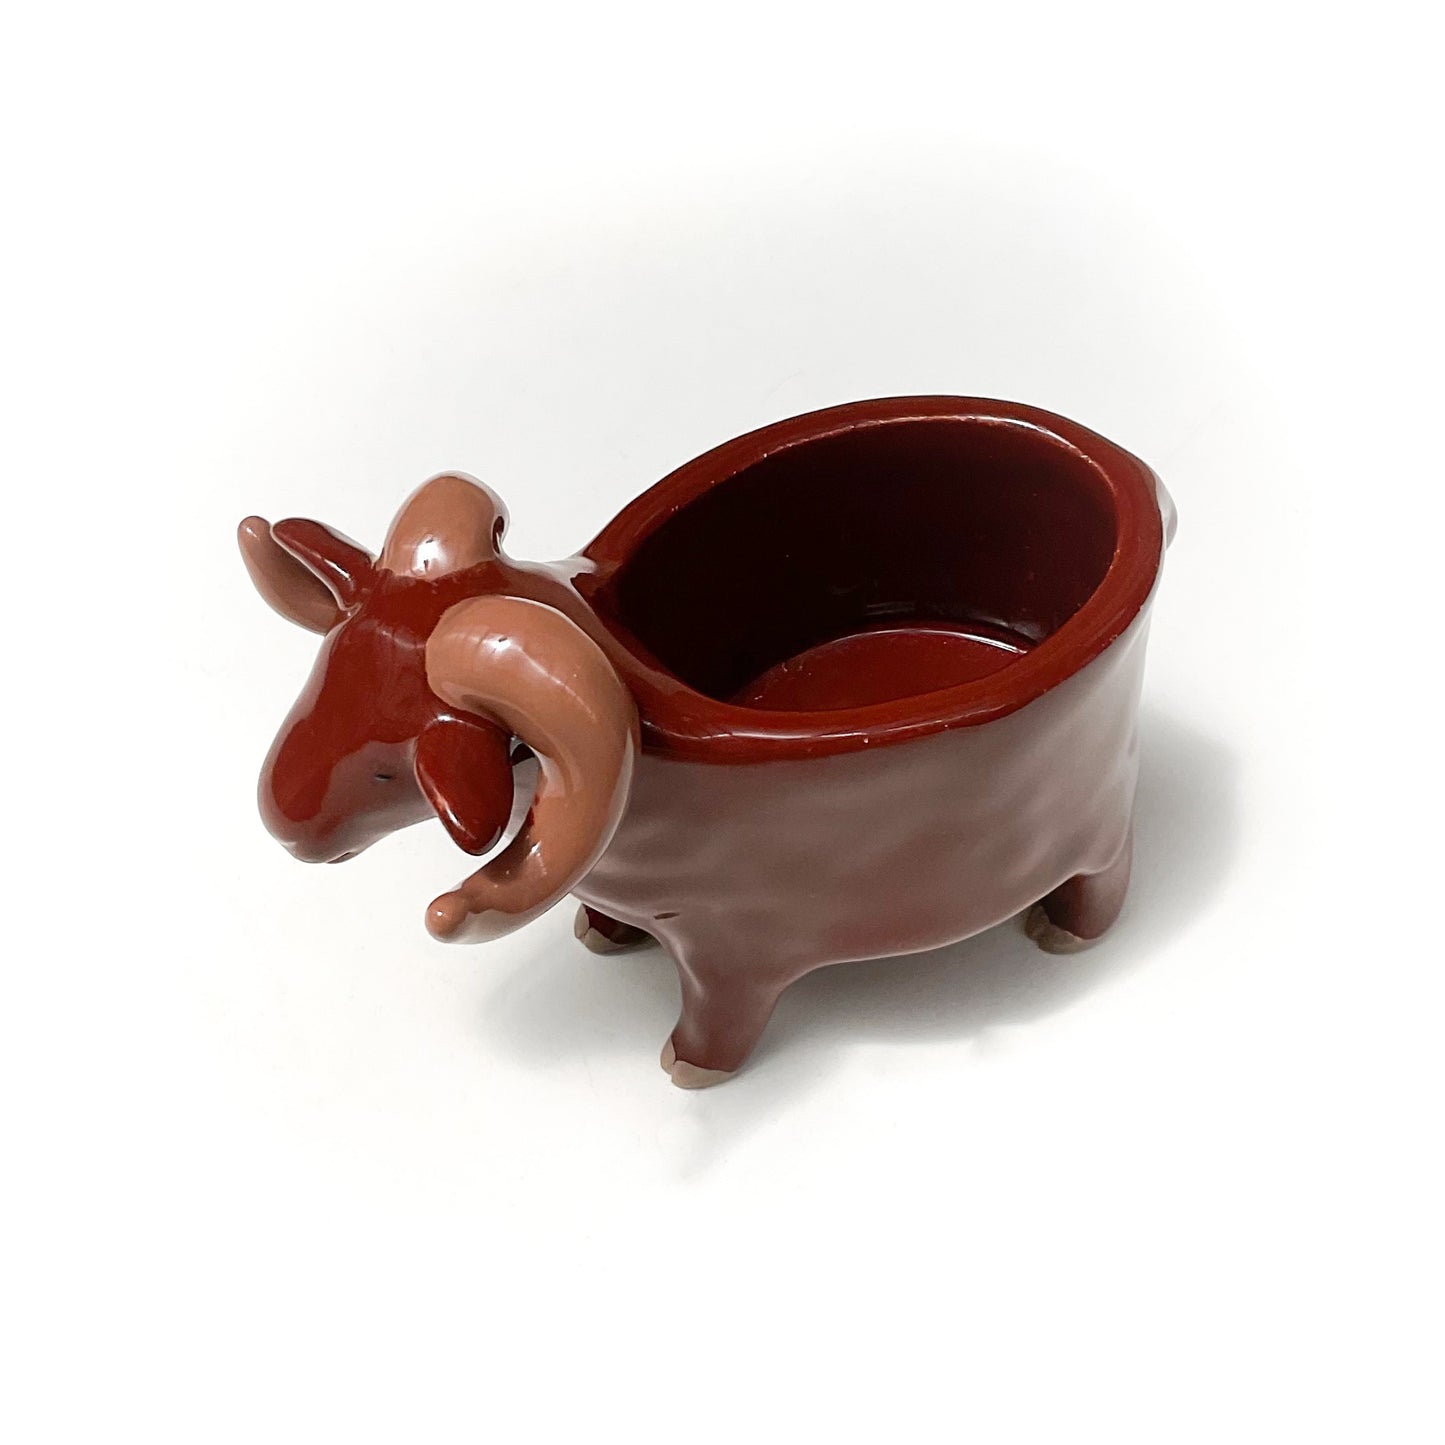 Chestnut Brown Sheep Pot - Ceramic Sheep Planter